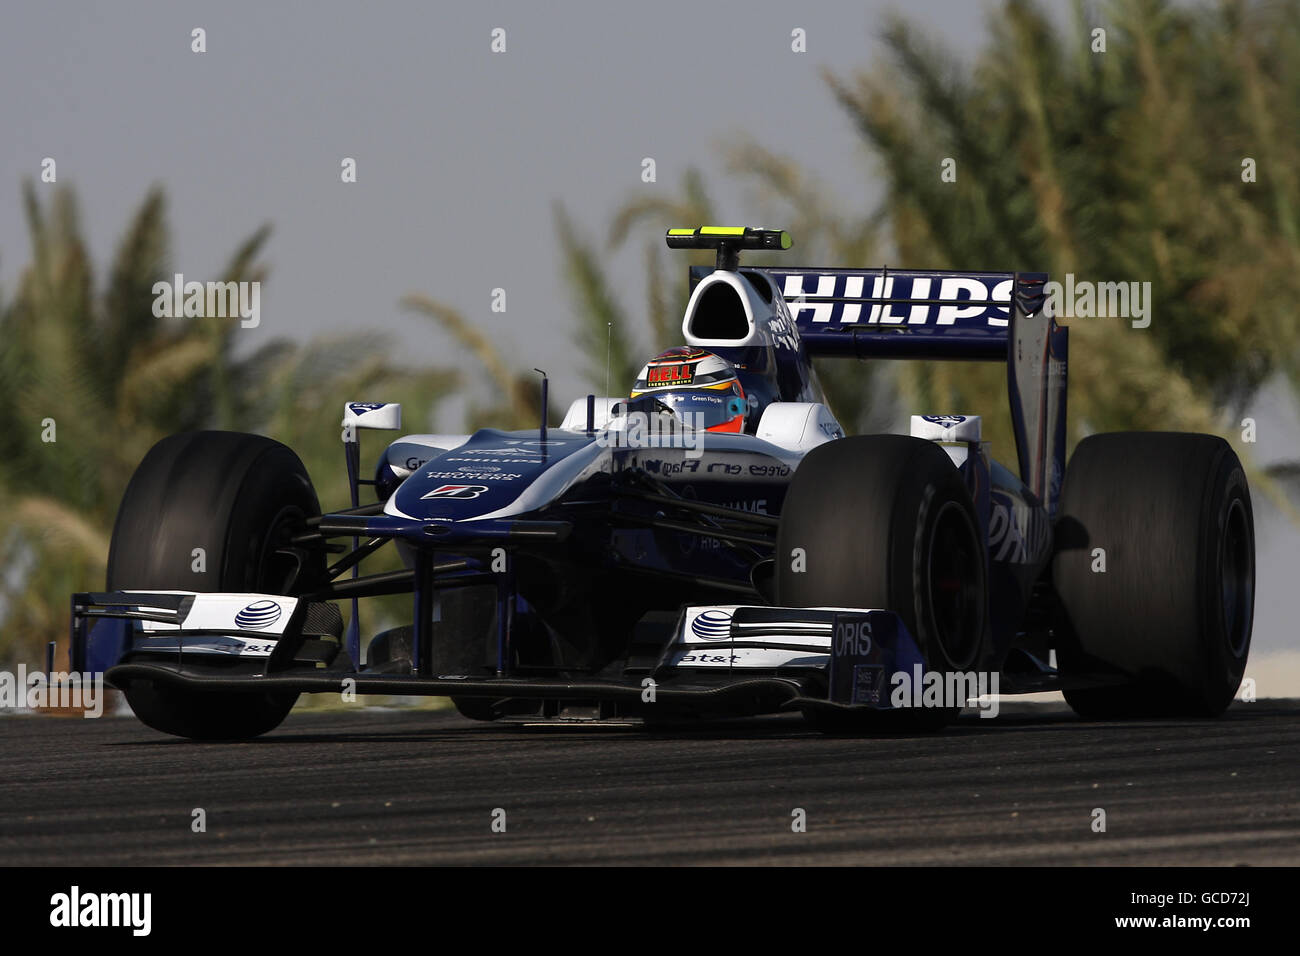 William's Nico Hulkenberg during the Gulf Air Bahrain Grand Prix at the Bahrain International Circuit in Sakhir, Bahrain Stock Photo